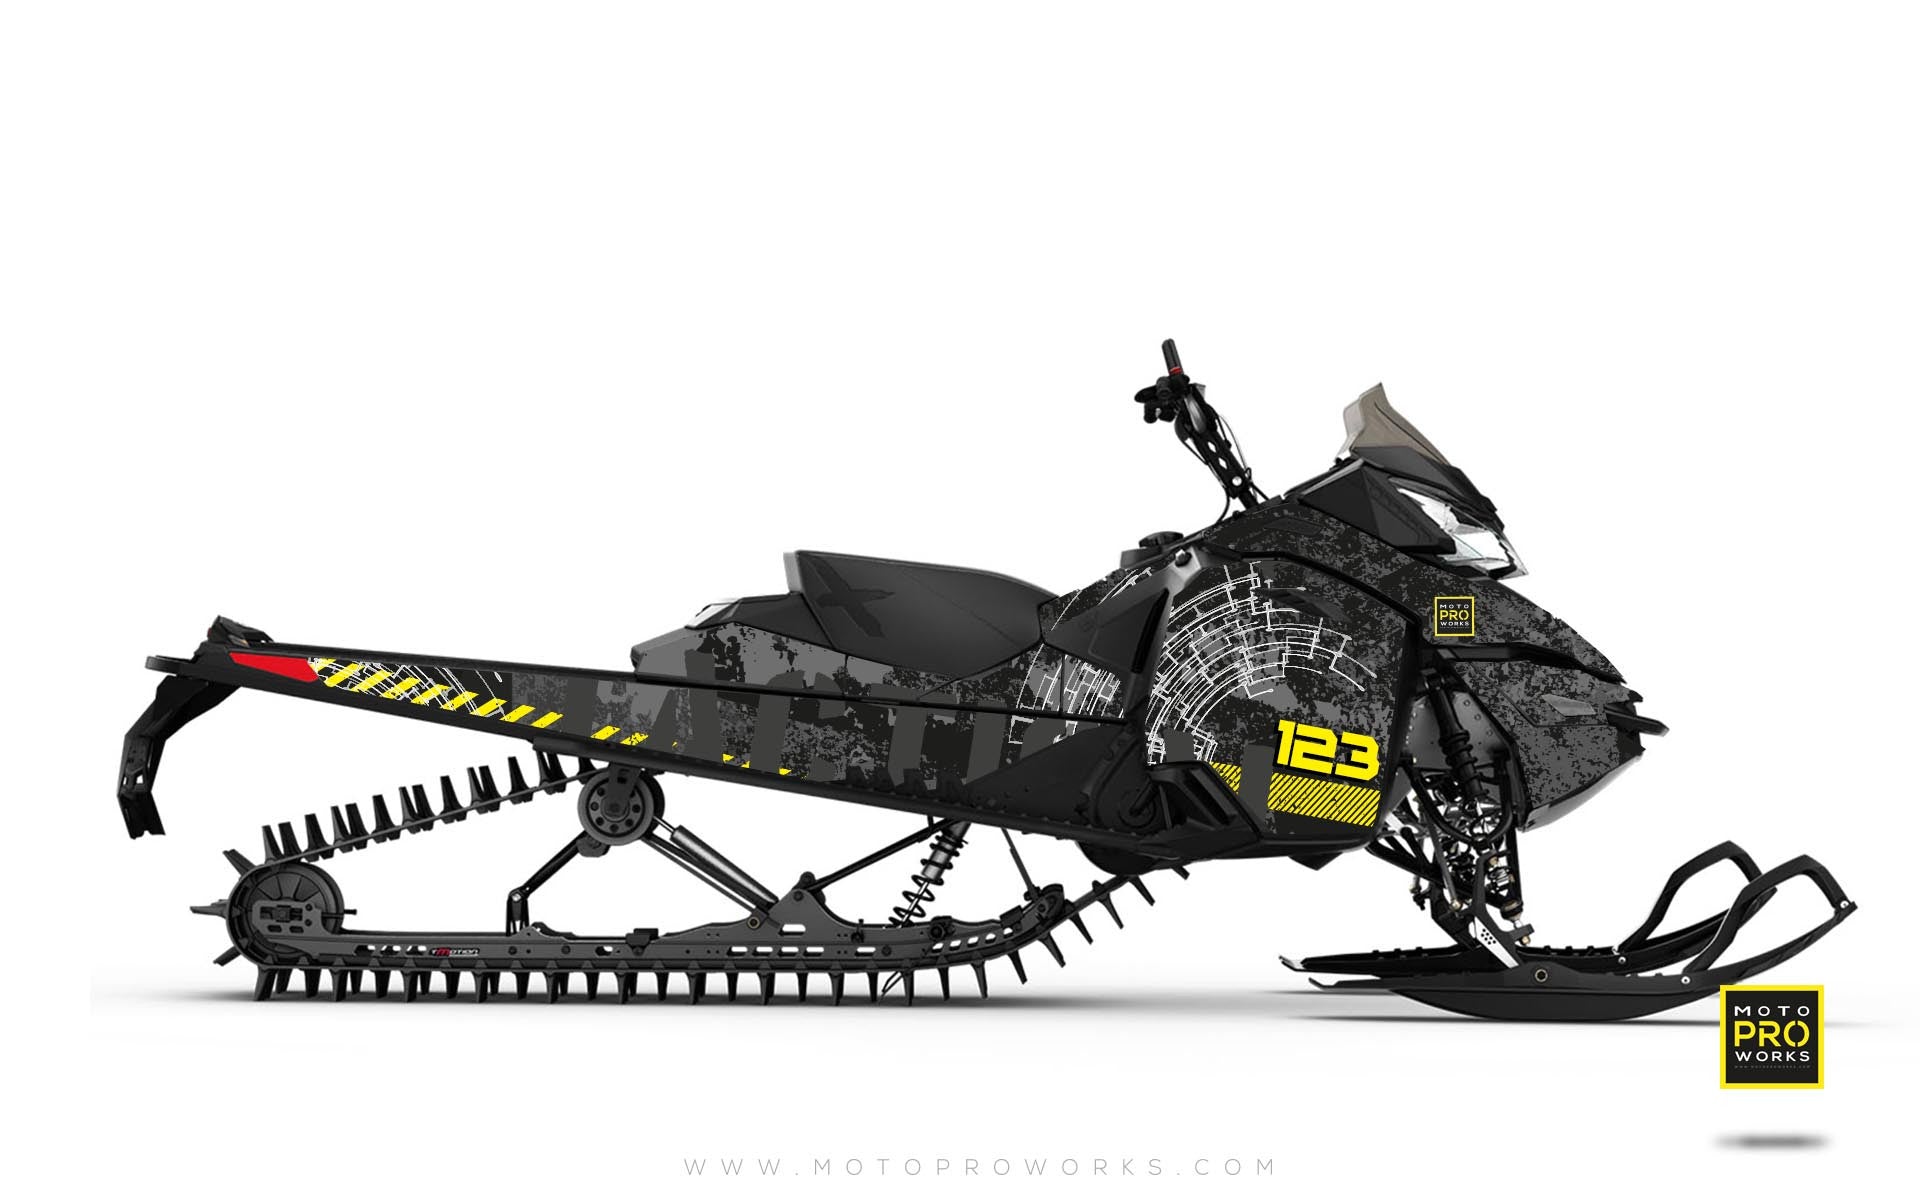 Ski-Doo Graphics - "Tactical" (black) - MotoProWorks | Decals and Bike Graphic kit